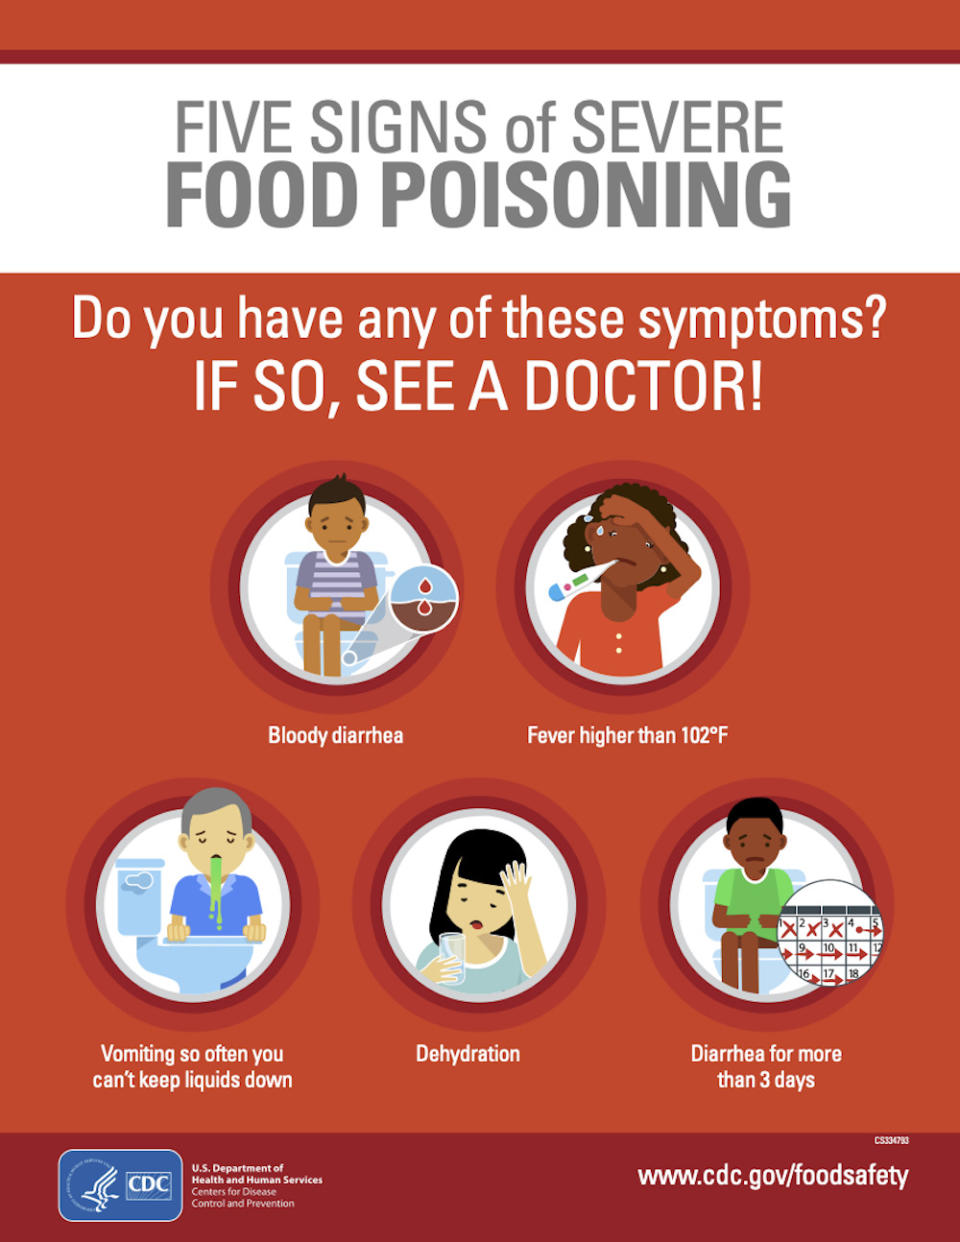 Food poisoning @ St. Regis - Symptoms